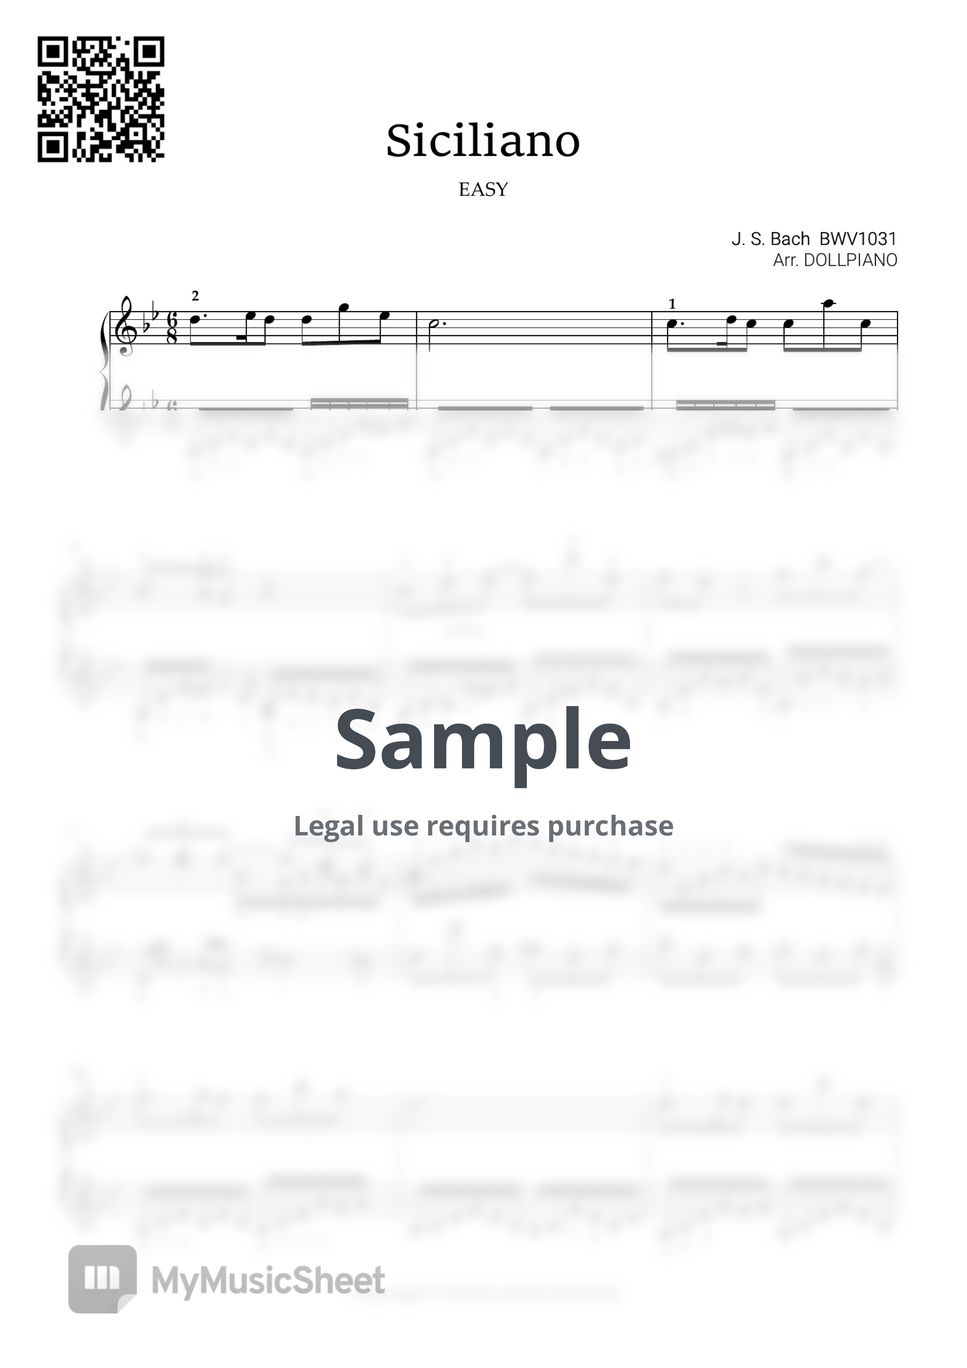 J. S. Bach - Siciliano BWV 1031 (EASY, 4 sheets) by DOLLPIANO